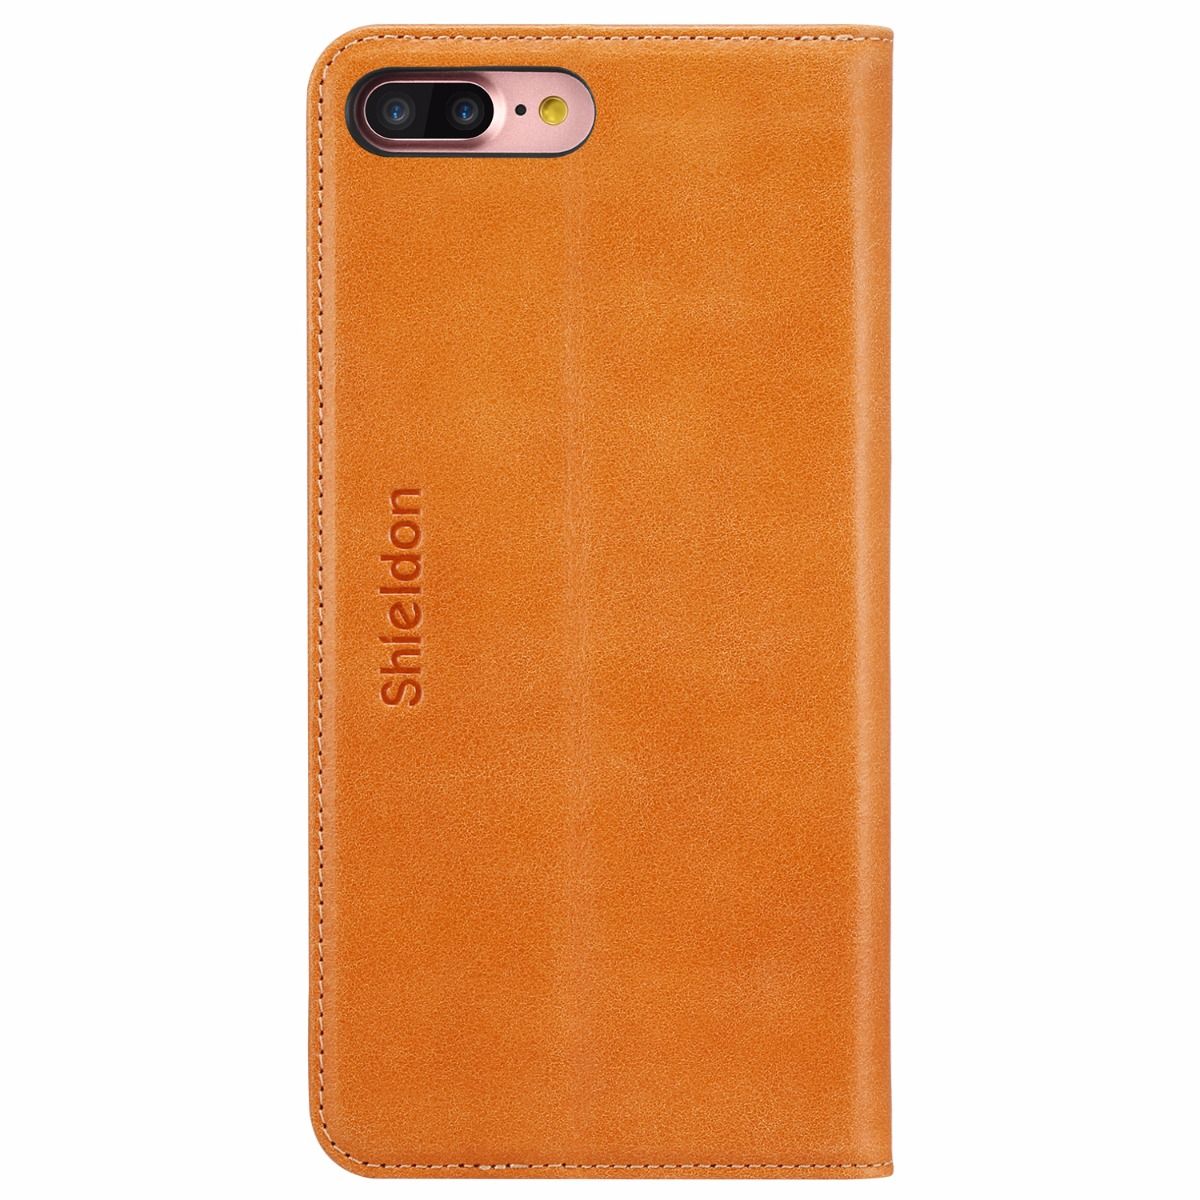 SHIELDON iPhone 8 Plus Wallet Case - iPhone 8 Plus Genuine Leather Kickstand Case